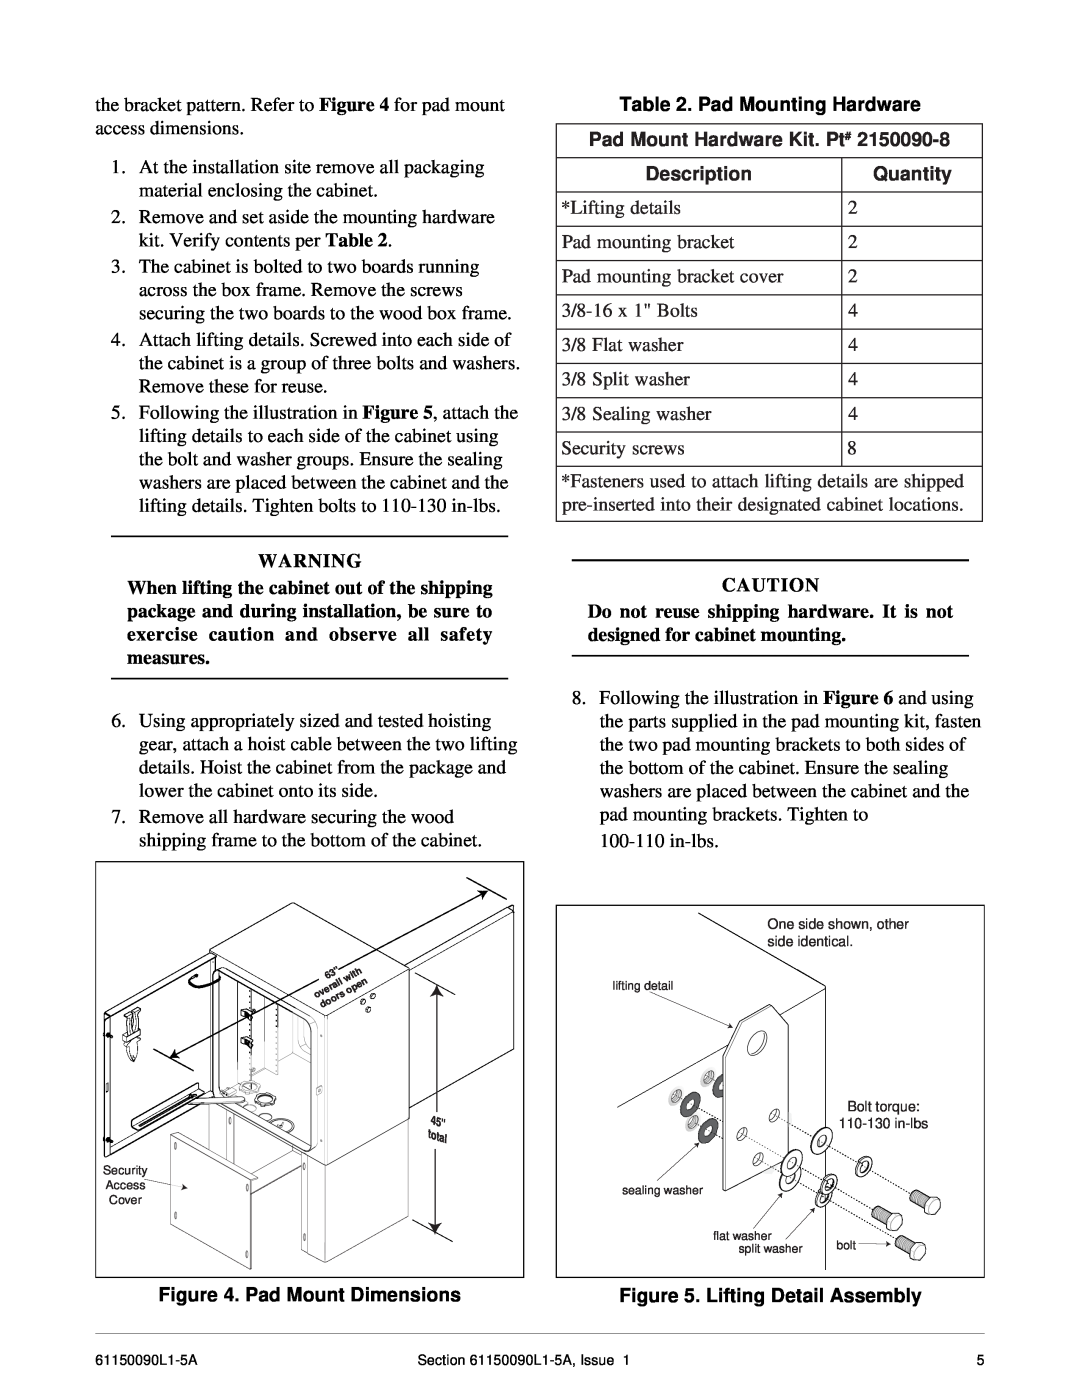 ADTRAN T200 H2TU-R Pad Mount Dimensions, Pad Mounting Hardware Pad Mount Hardware Kit. Pt#, Quantity, Description 